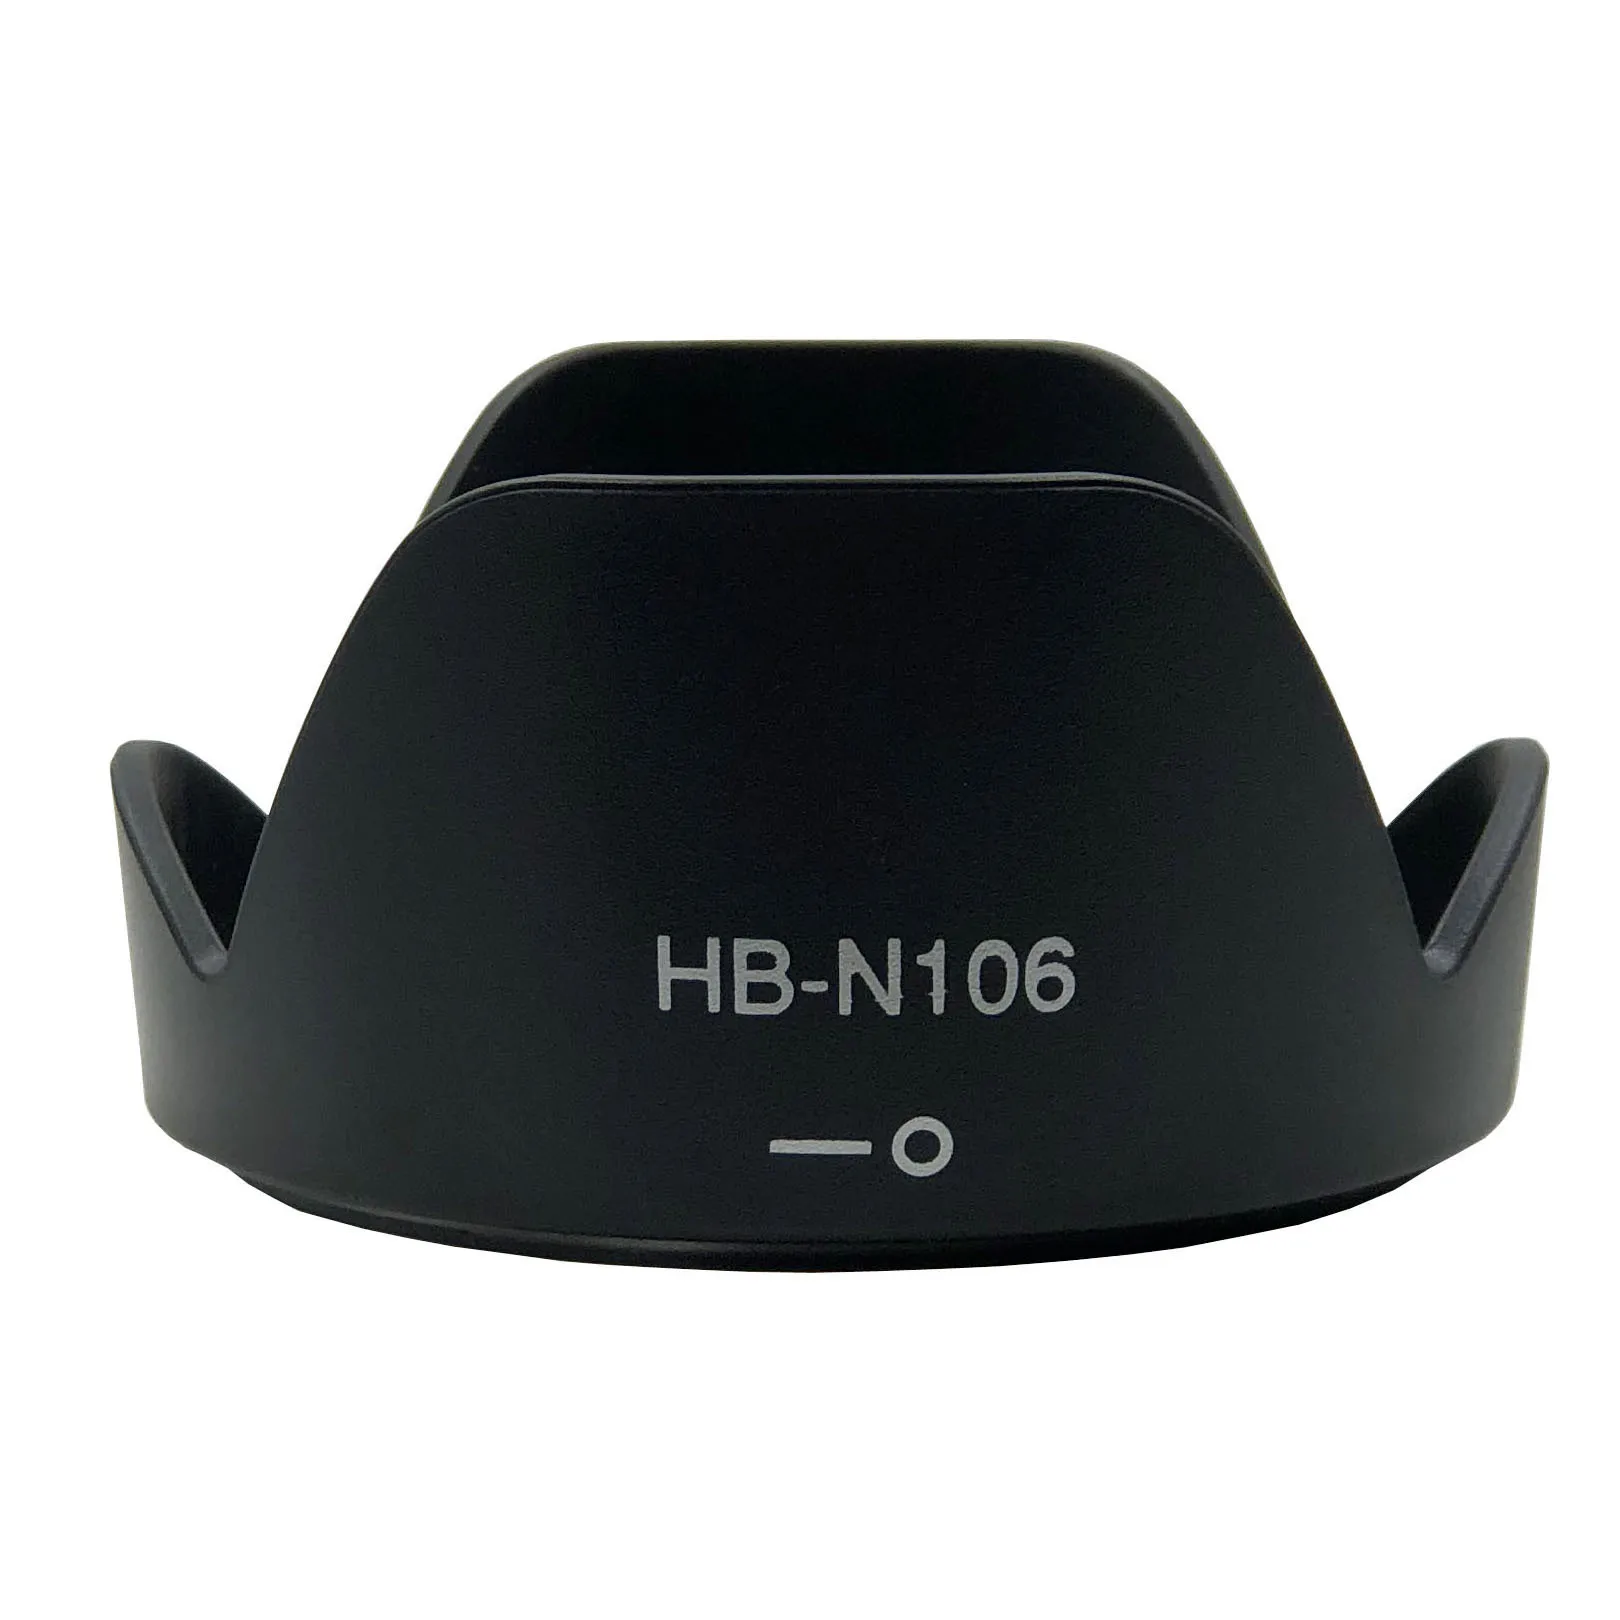 

Camera Lens Hood HB-N106 Bayonet Mount for Nikon D3500 D5600 With AF-P DX Nikkor 18-55mm f/3.5-5.6G VR 55mm Filter Lens